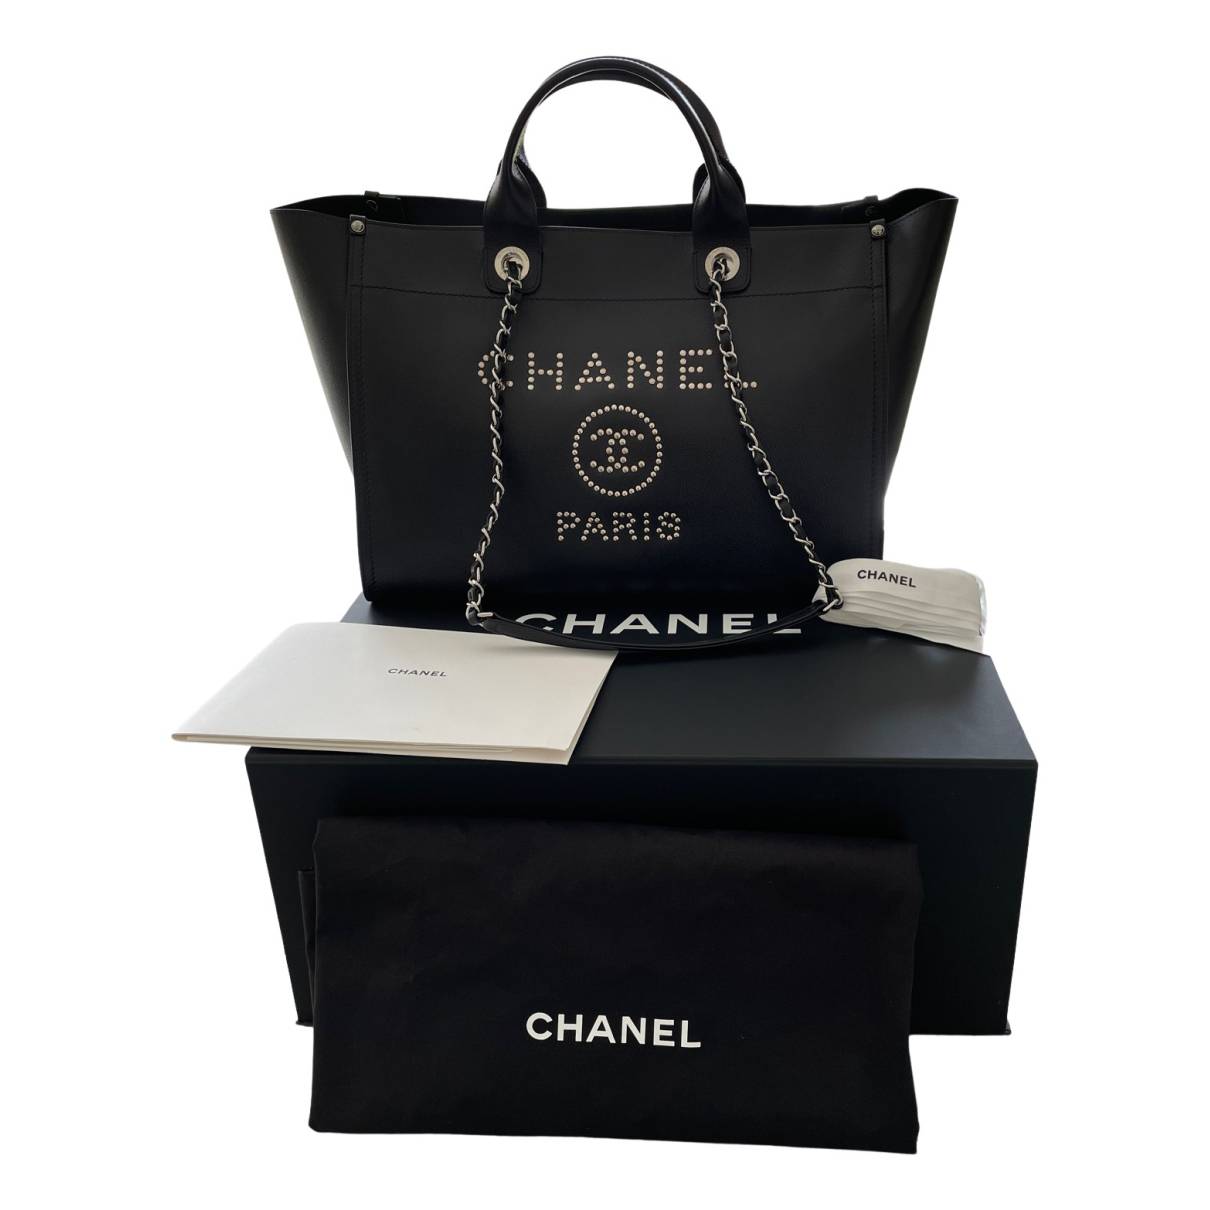 Chanel Black Medium Studded Deauville Shopping Bag Chanel